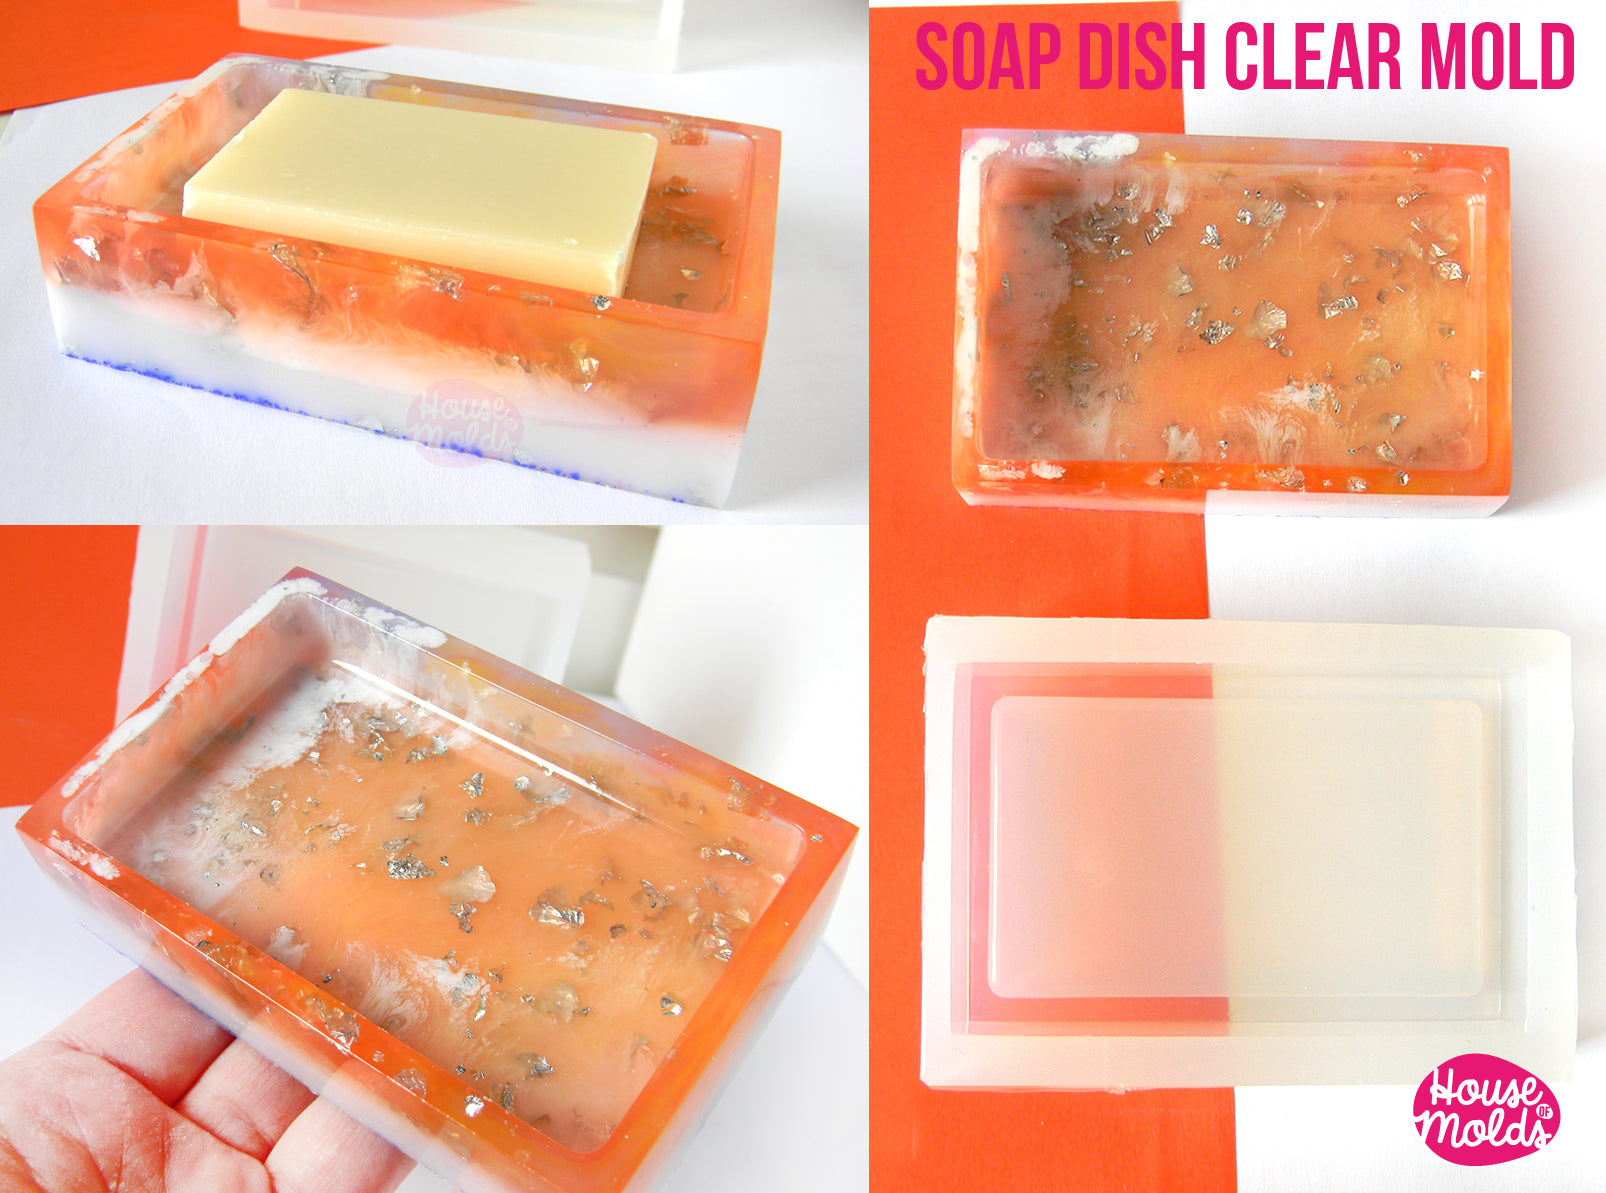 Practical Drain Soap Dish Resin Mold-bar Soap Holder Mold for